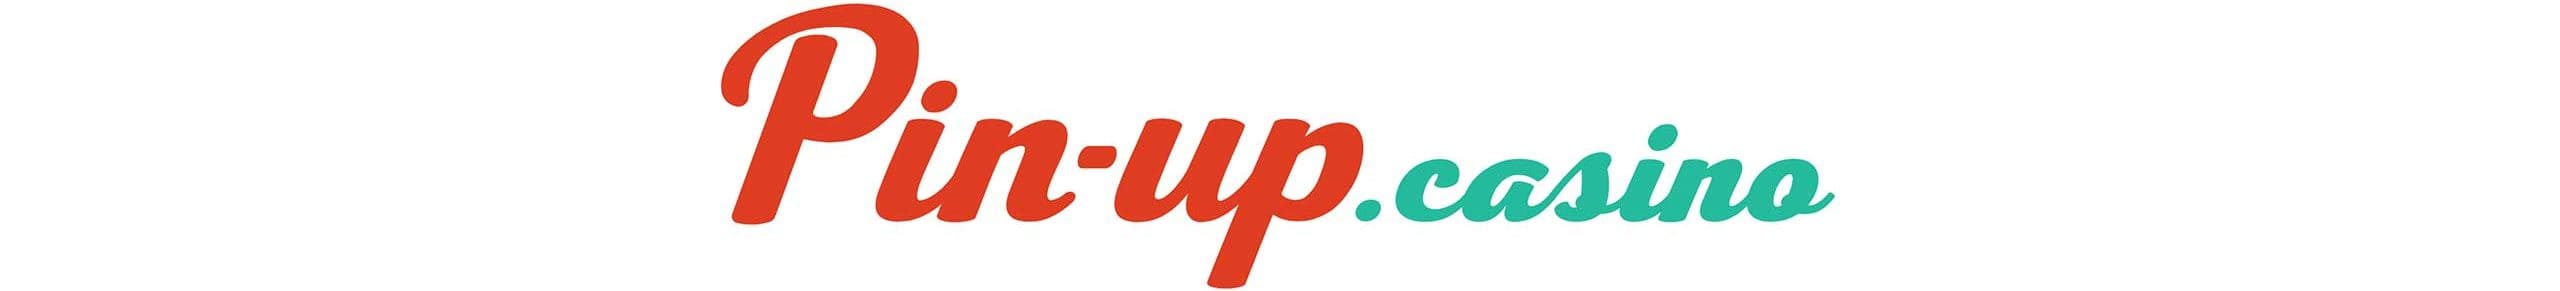 Логотип казино Pin-up